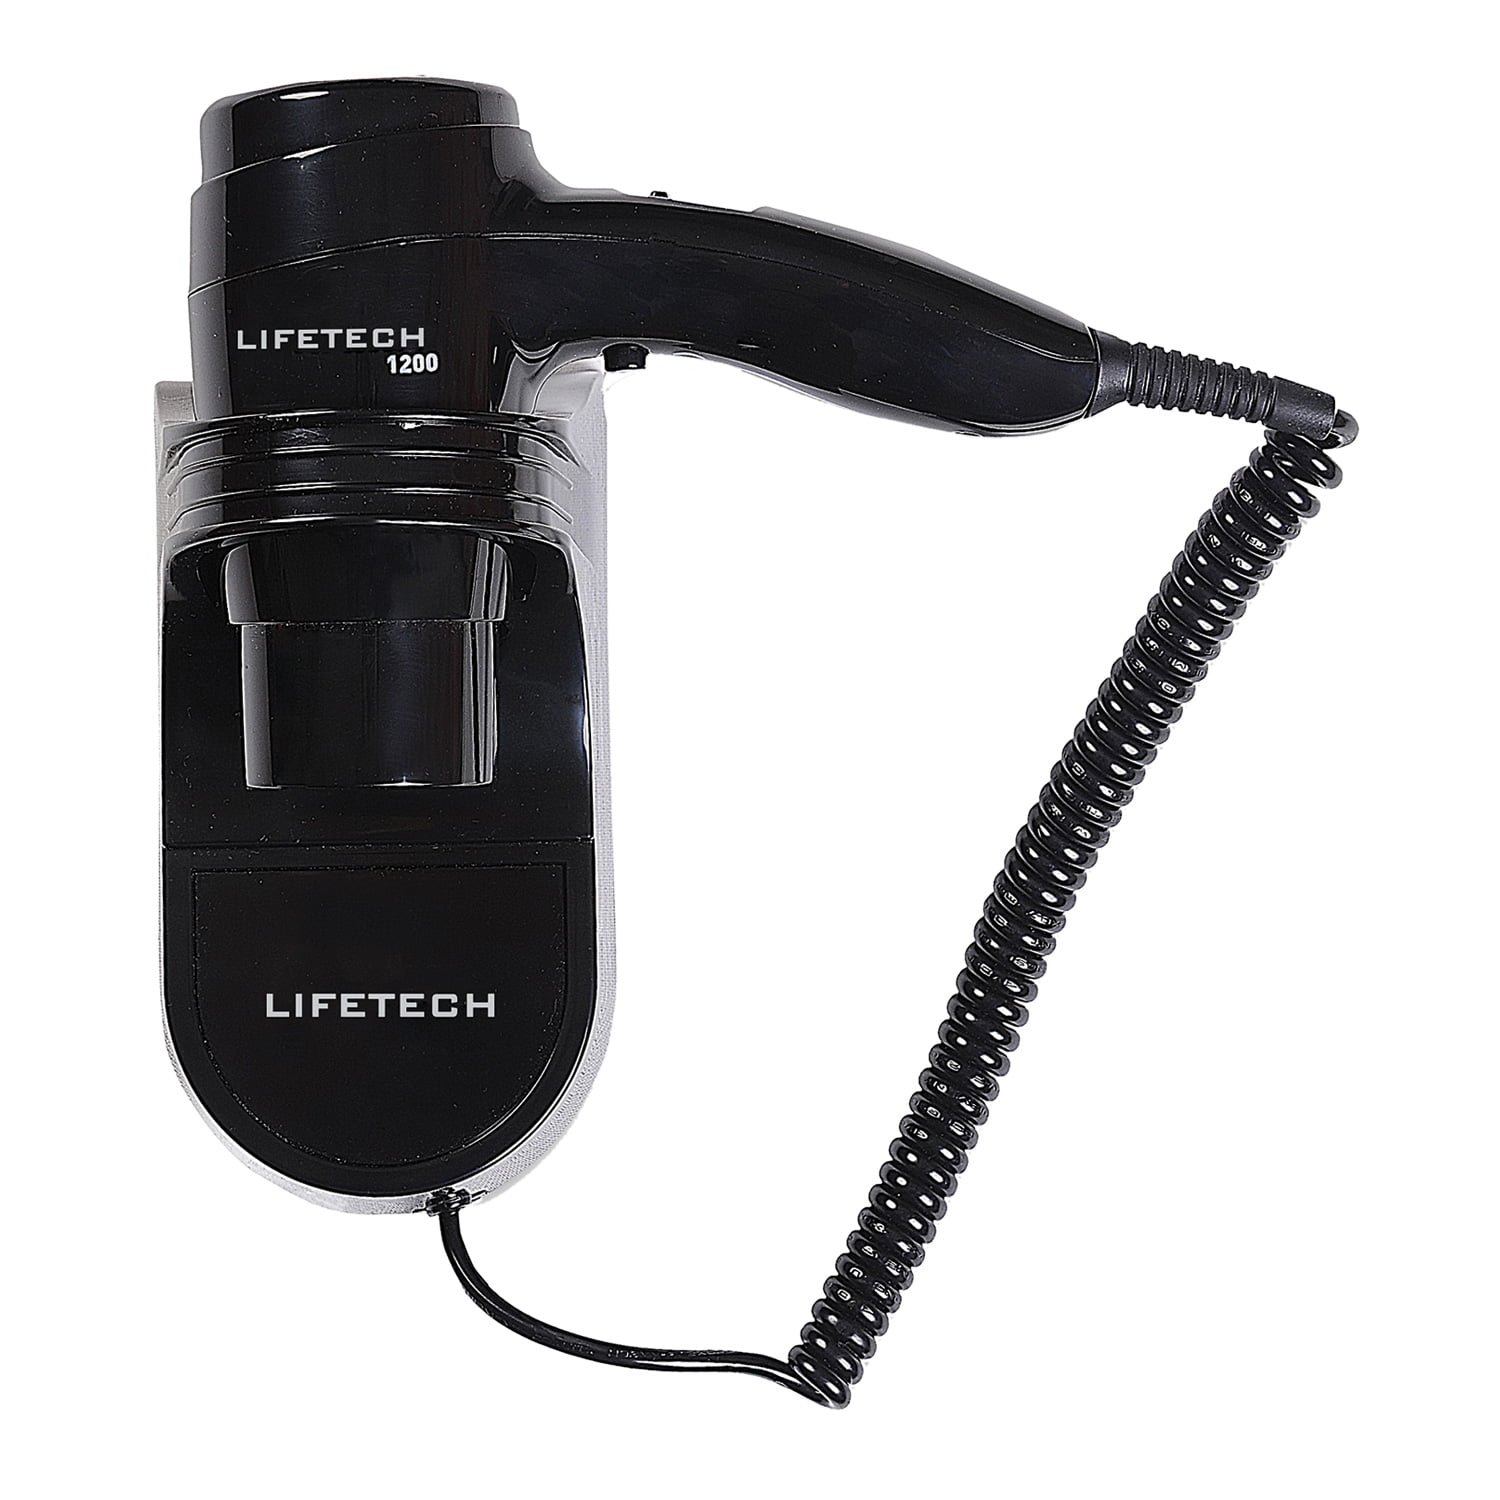 Lifetech Luxury Hair Dryers 01